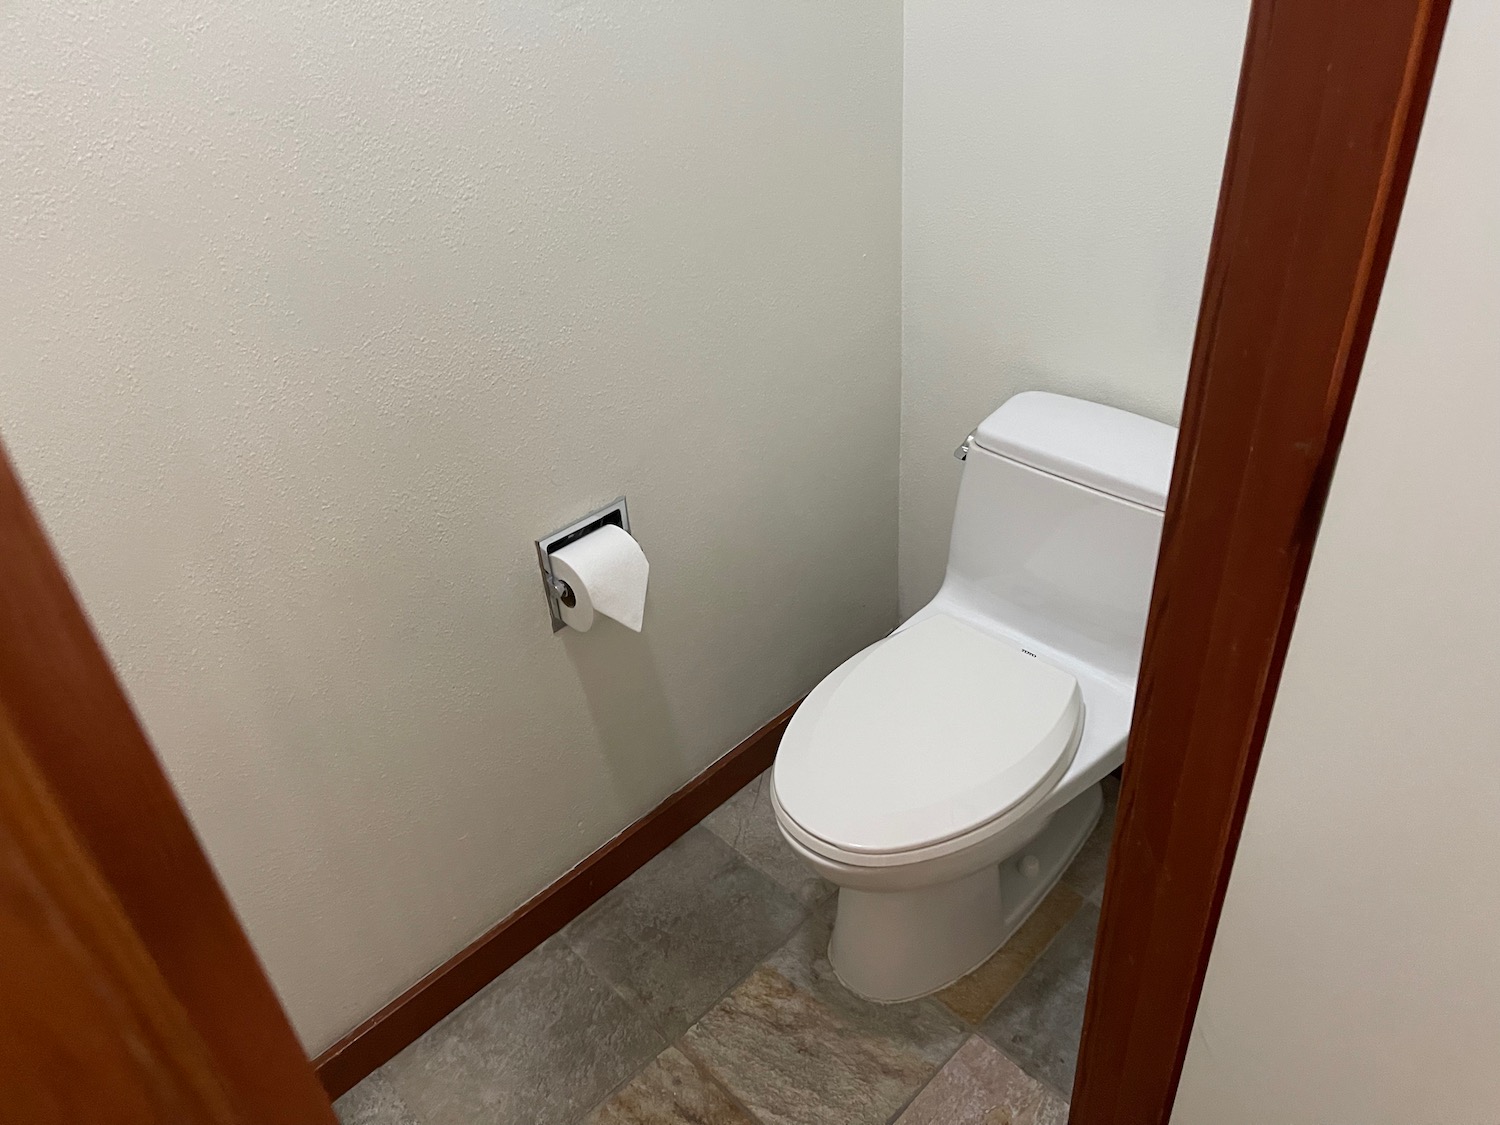 a toilet in a bathroom